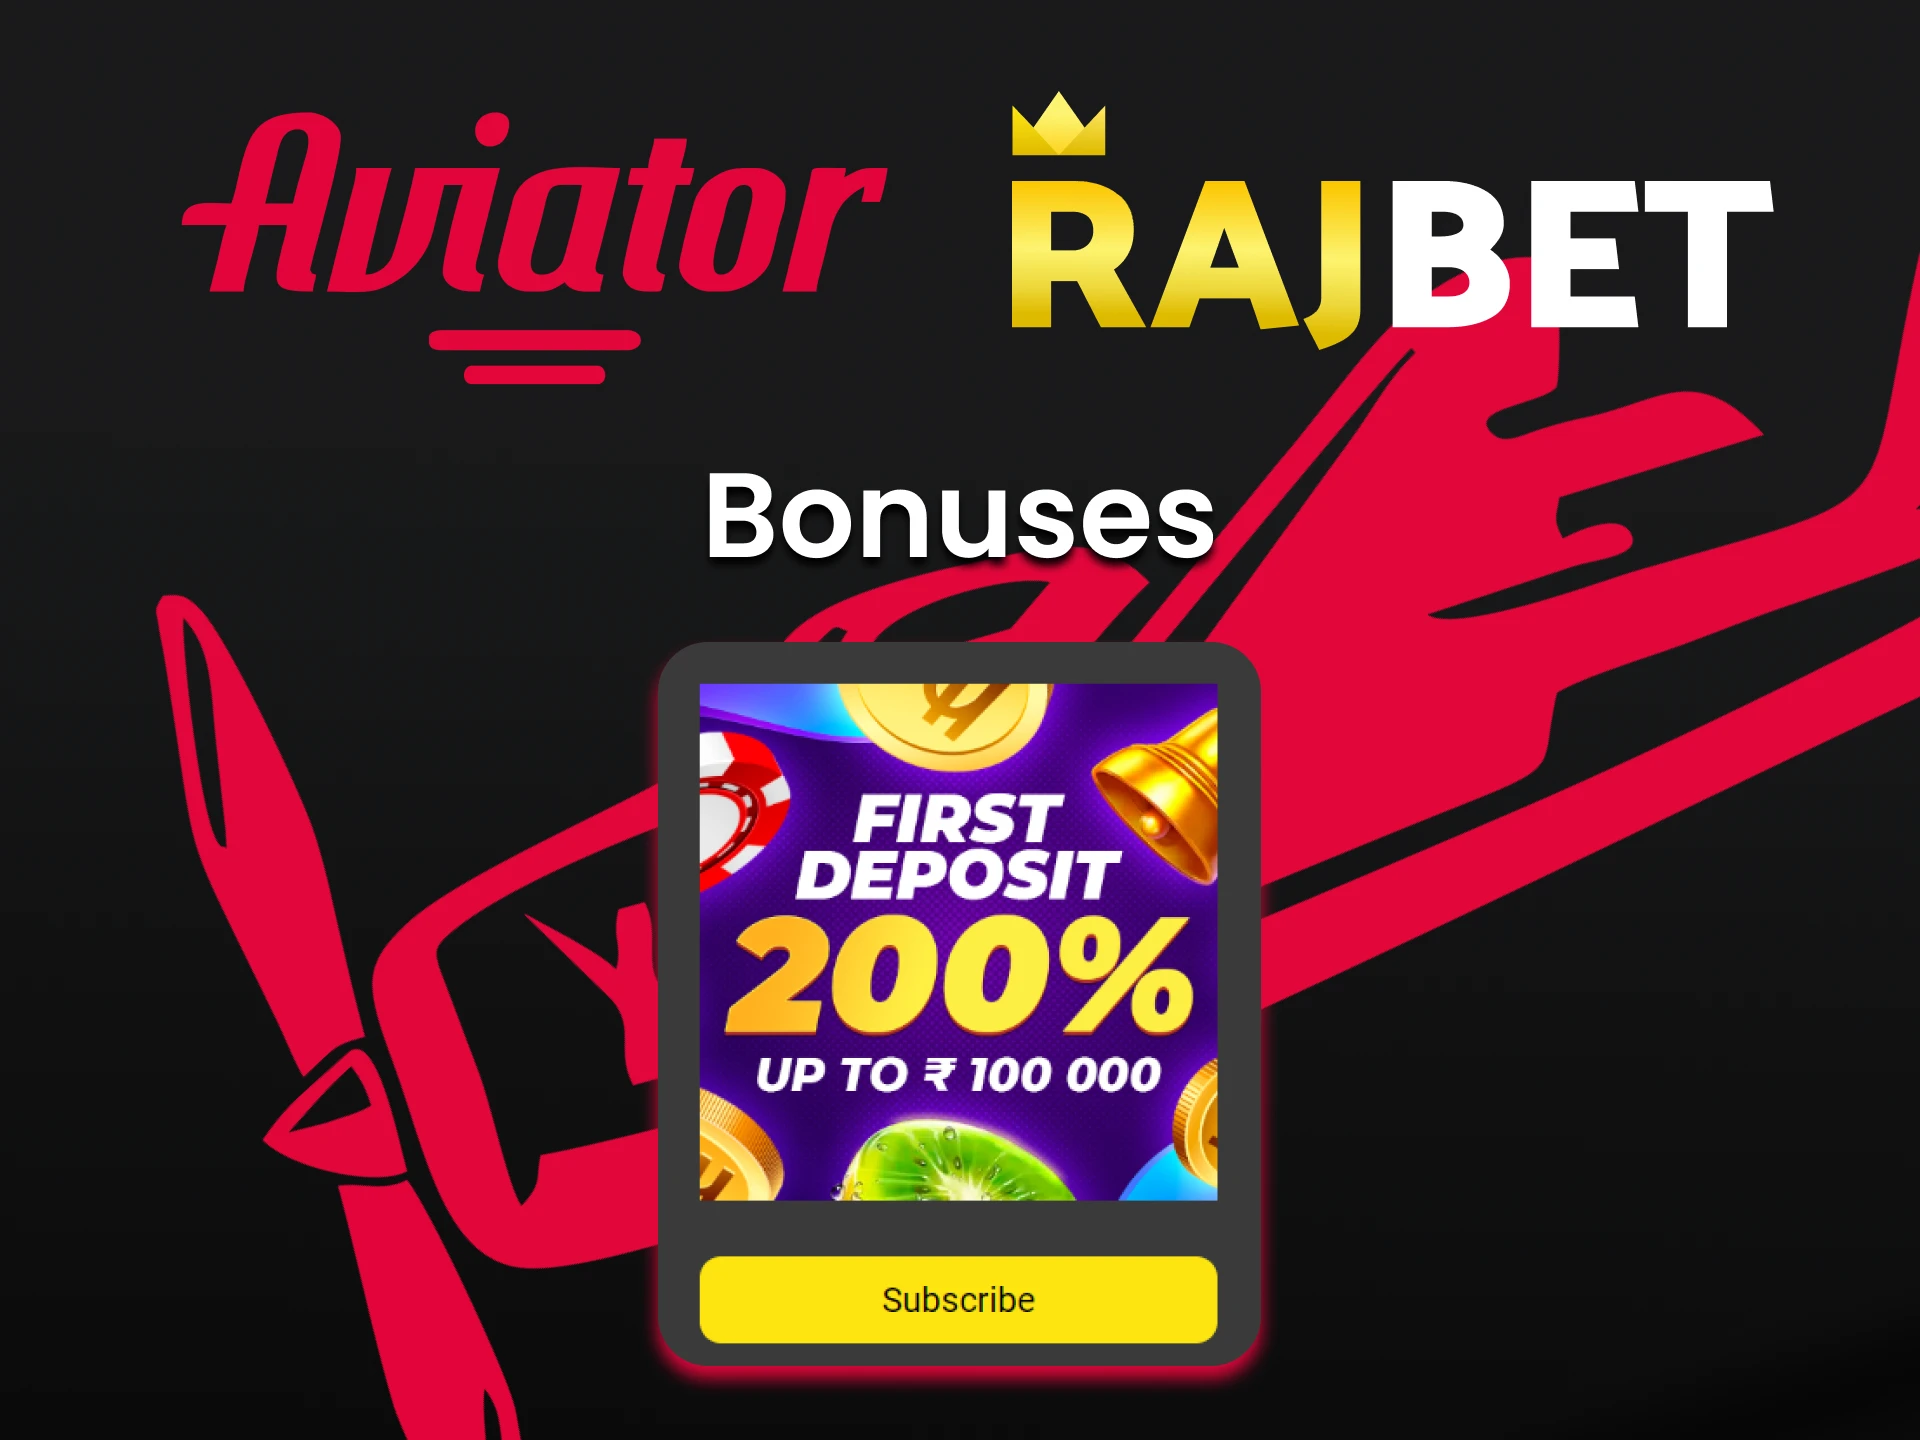 Get bonus from Rajbet for playing Aviator.